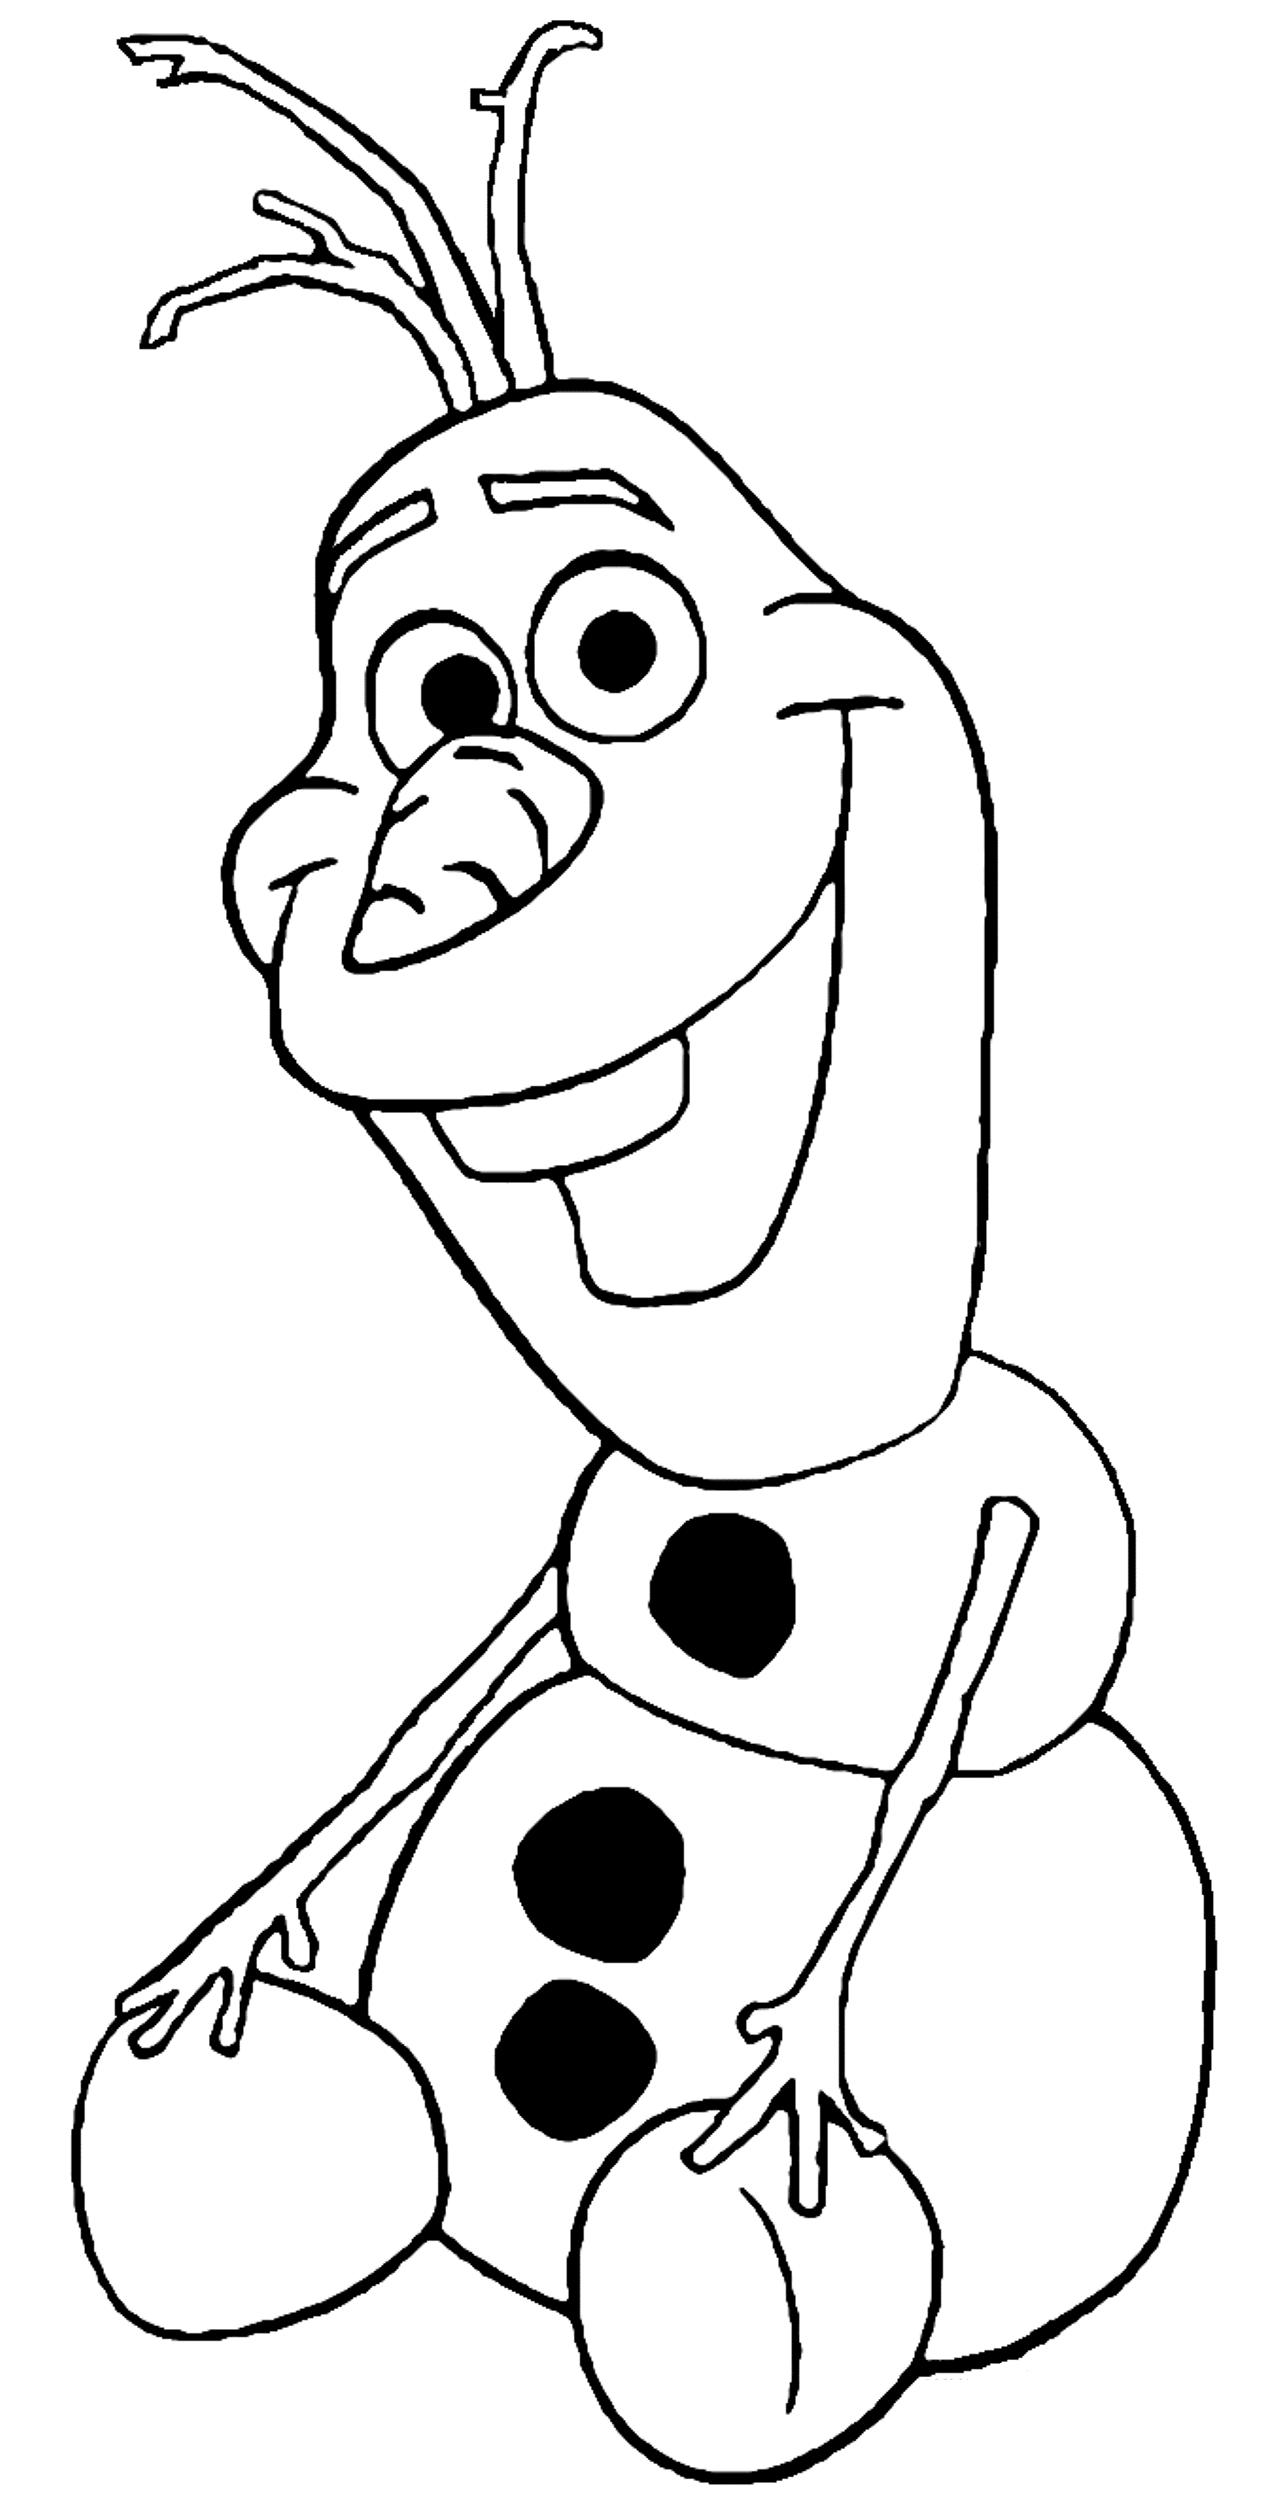 Olaf Friendliest Snowman In Arendelle